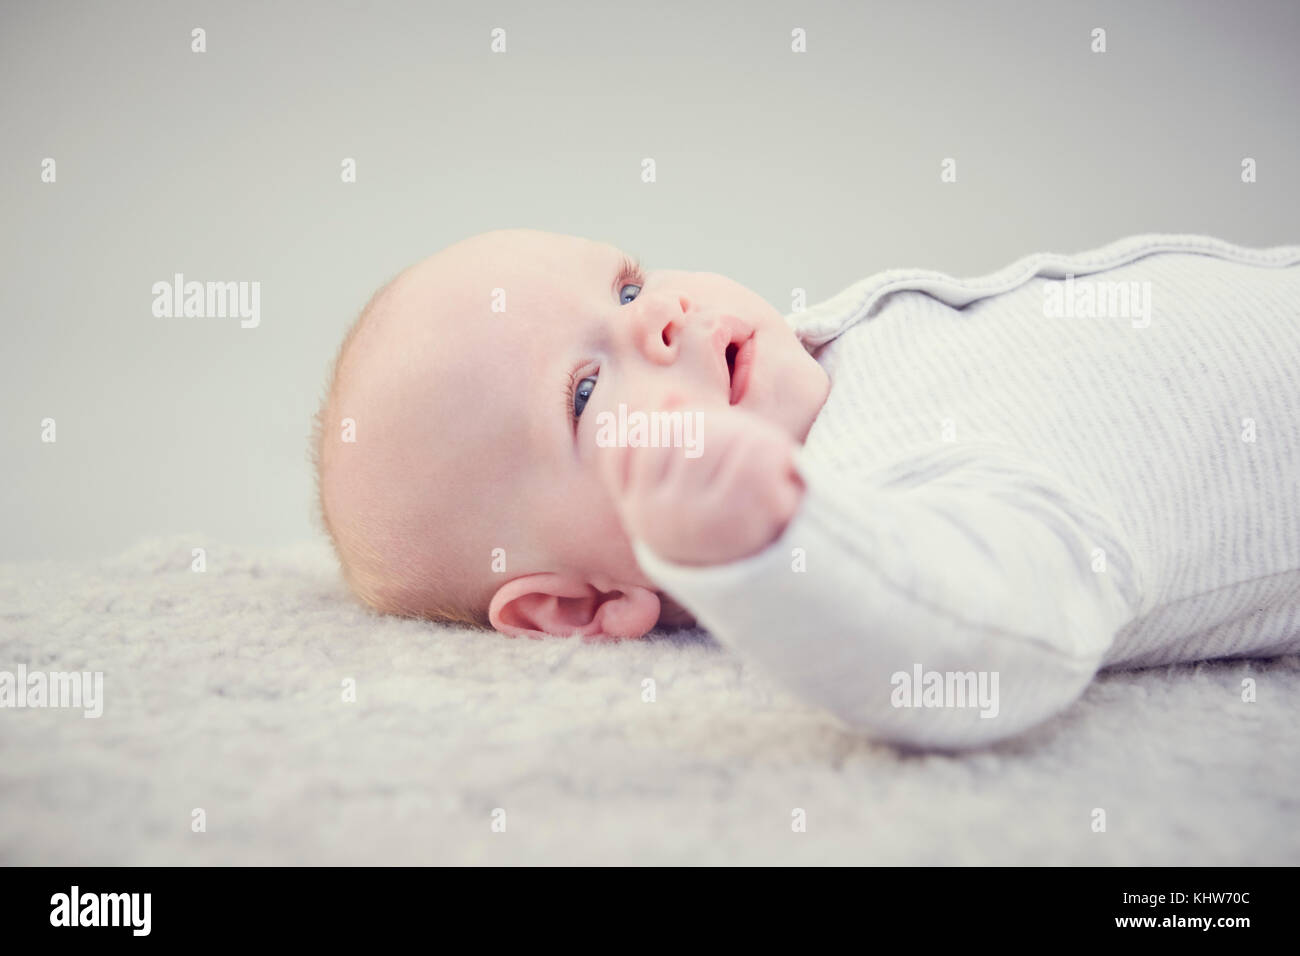 Newborn baby boy, lying on rug, close-up Stock Photo